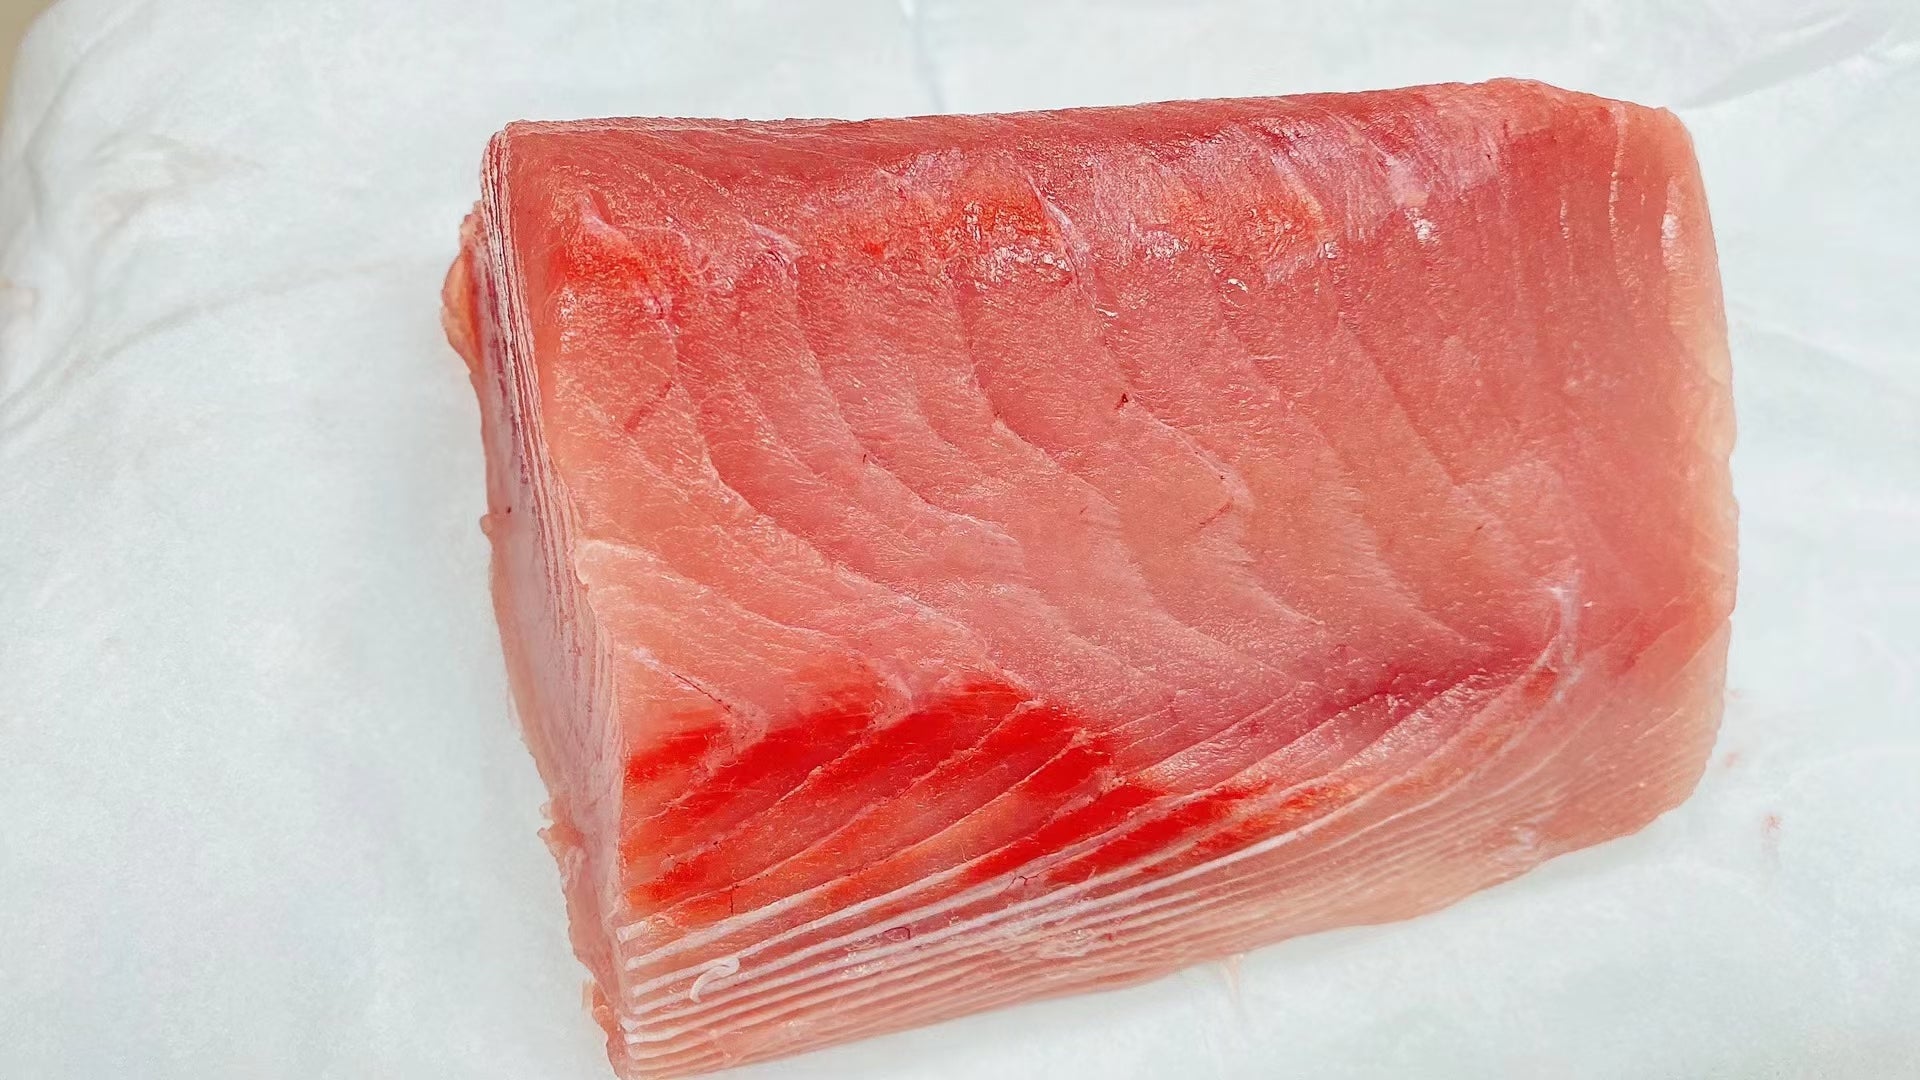 Benefits of Eating Tuna